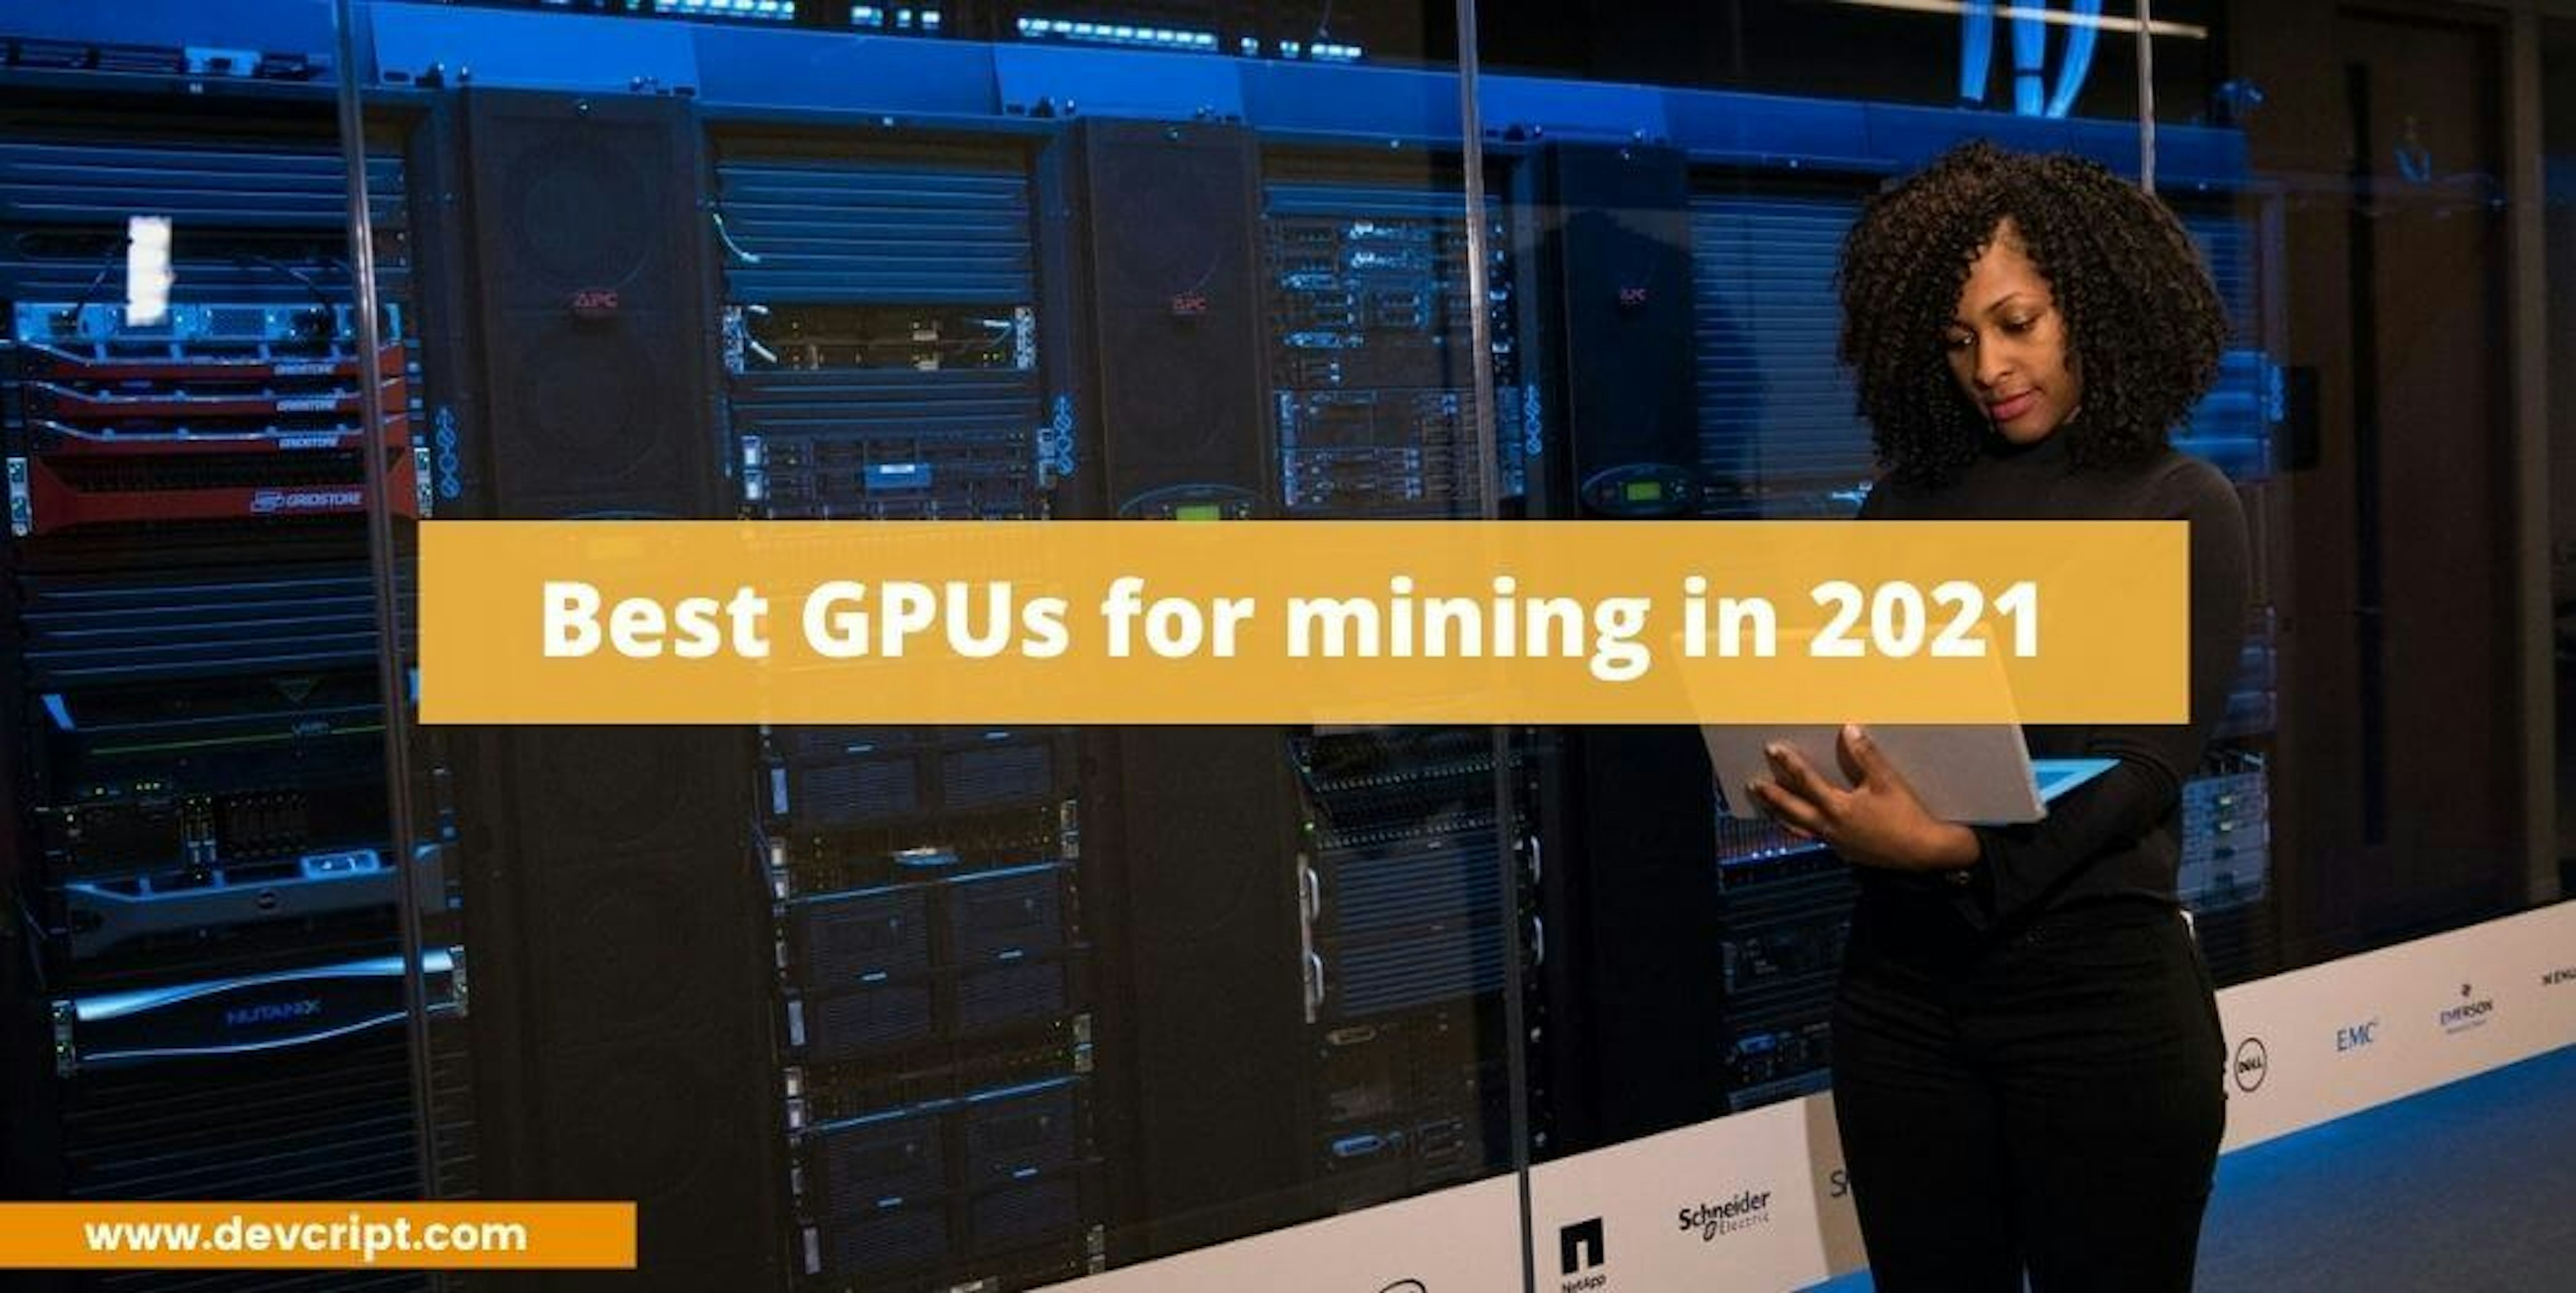 GPUs for mining